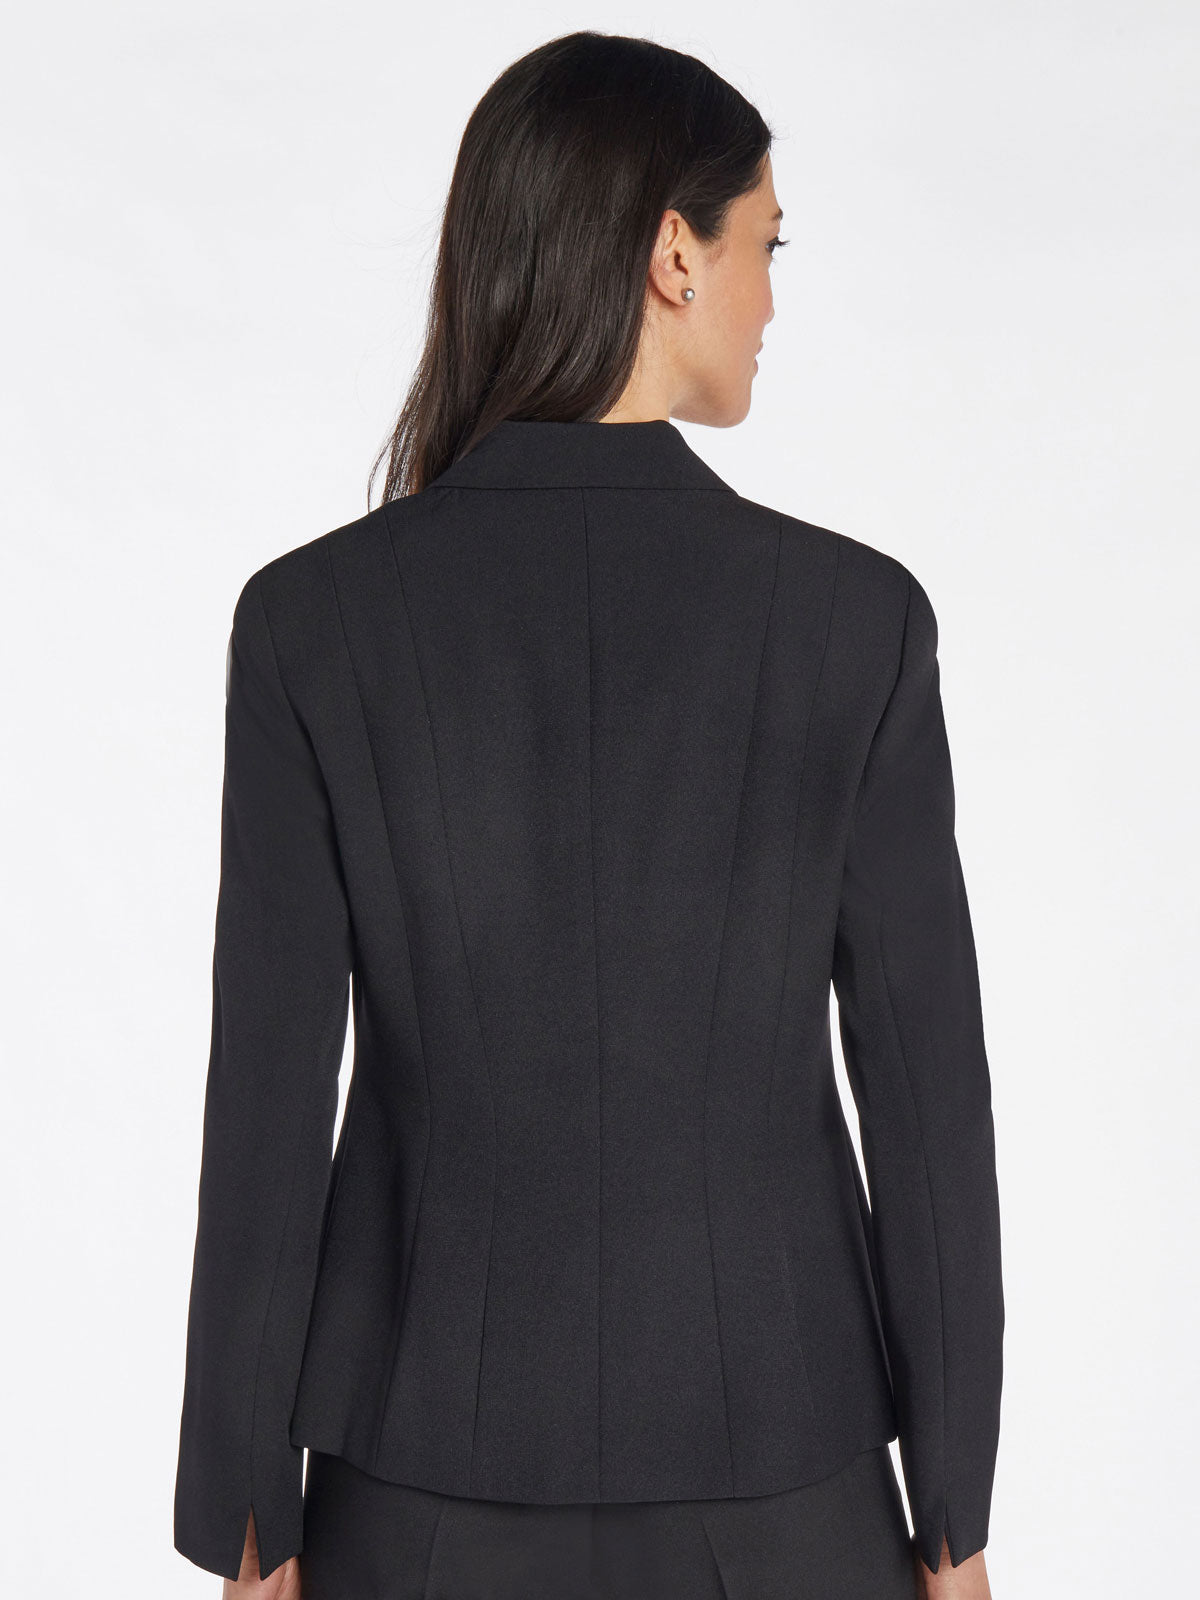 Women's Kasper Separates Three-Button Blazer Jacket Women's Size